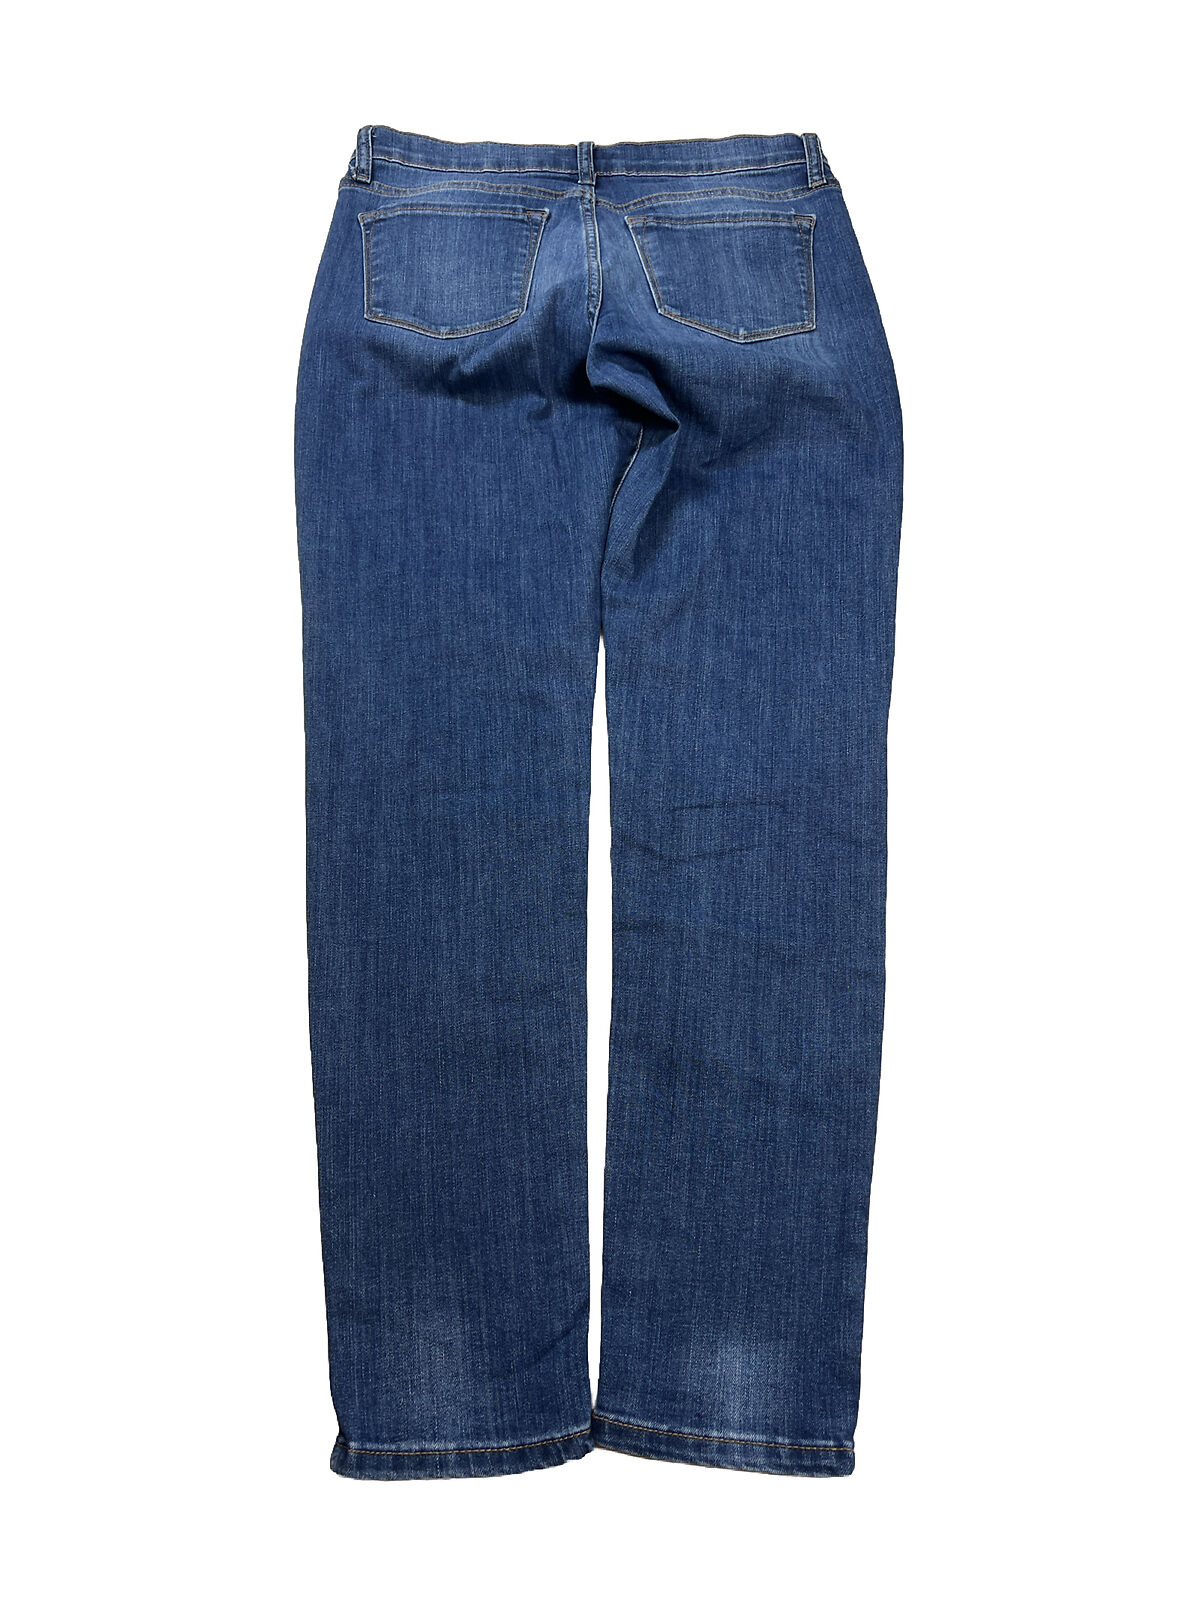 Banana Republic Women's Medium Wash Skinny Fit Jeans - 27/4